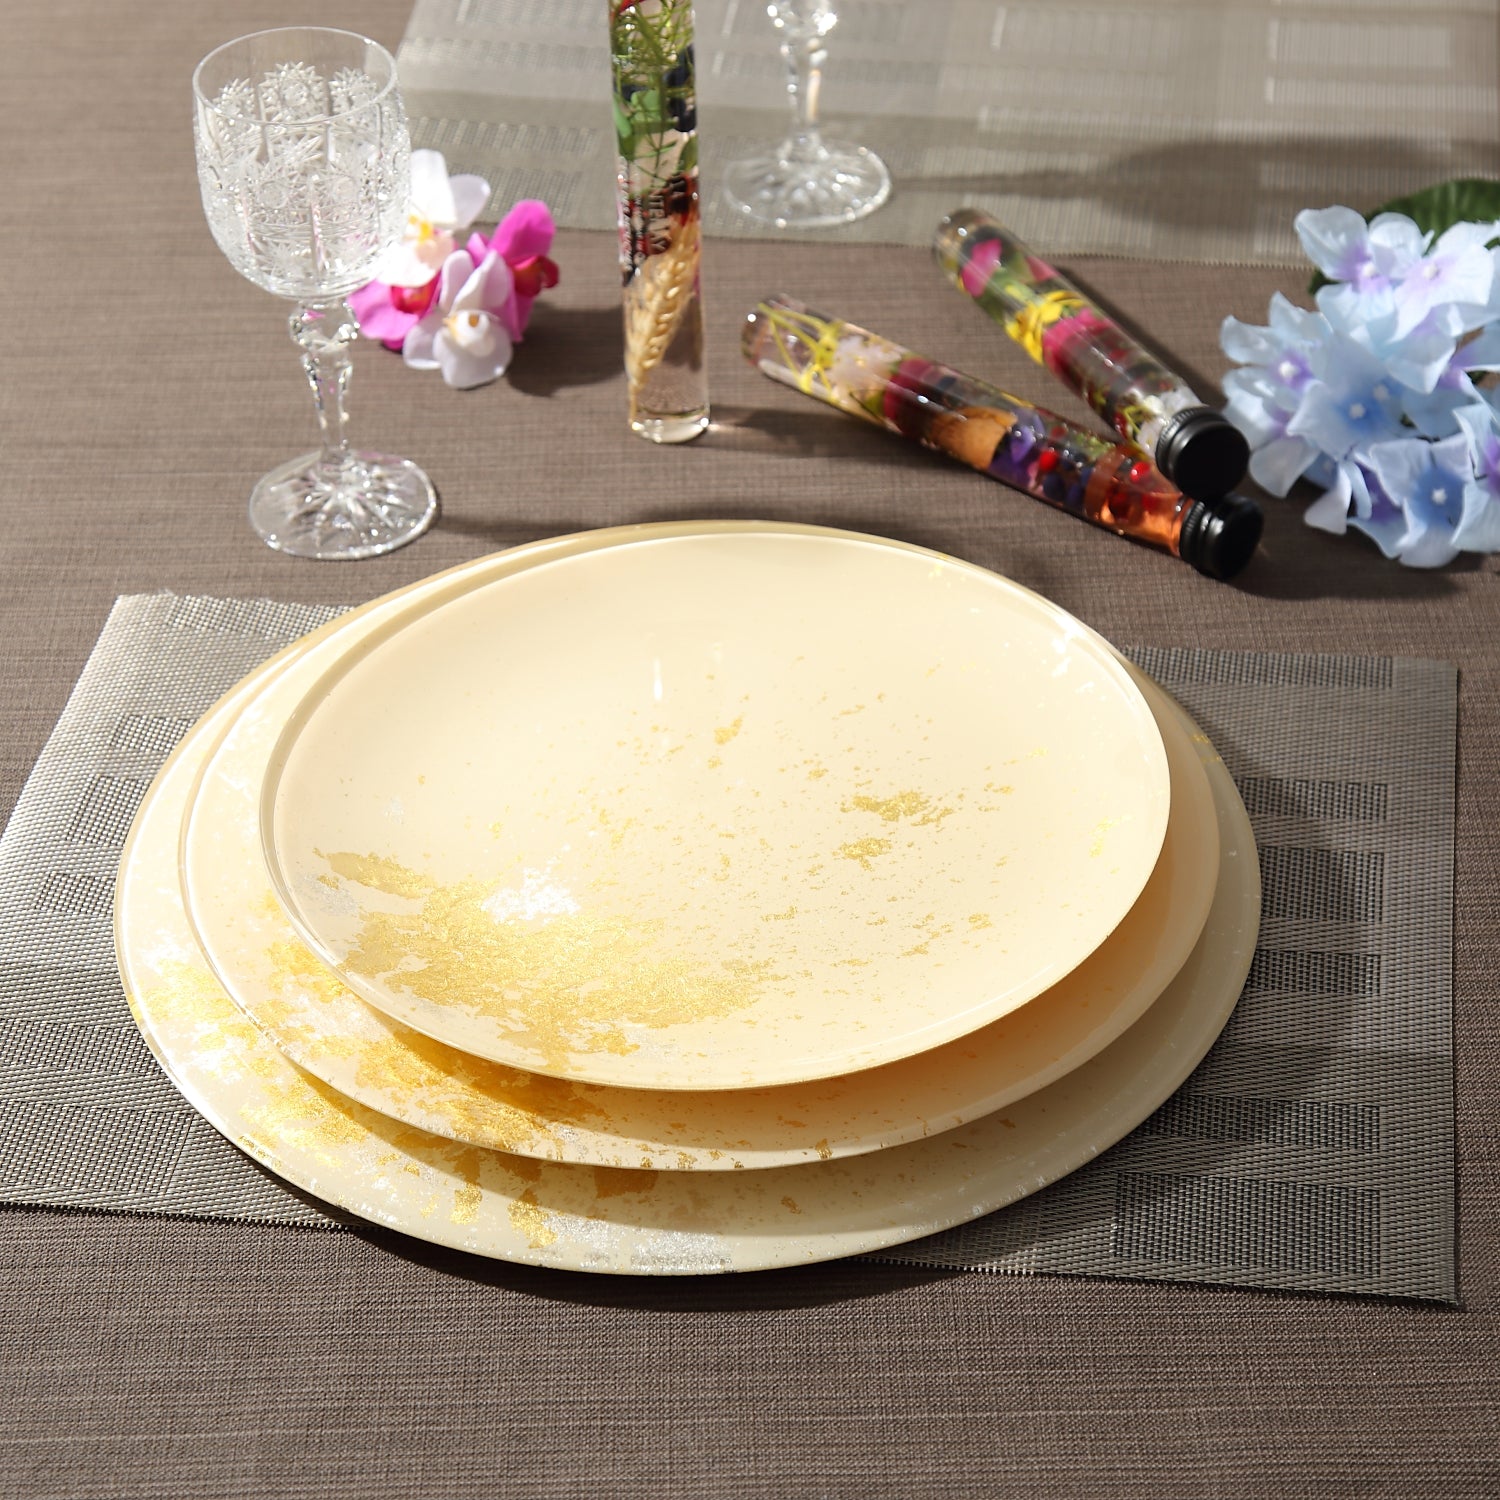 Syosaku Japanese Urushi Glass Flat Dinner Plate 11-inch (28cm) Light Beige with Gold Leaf, Dishwasher Safe